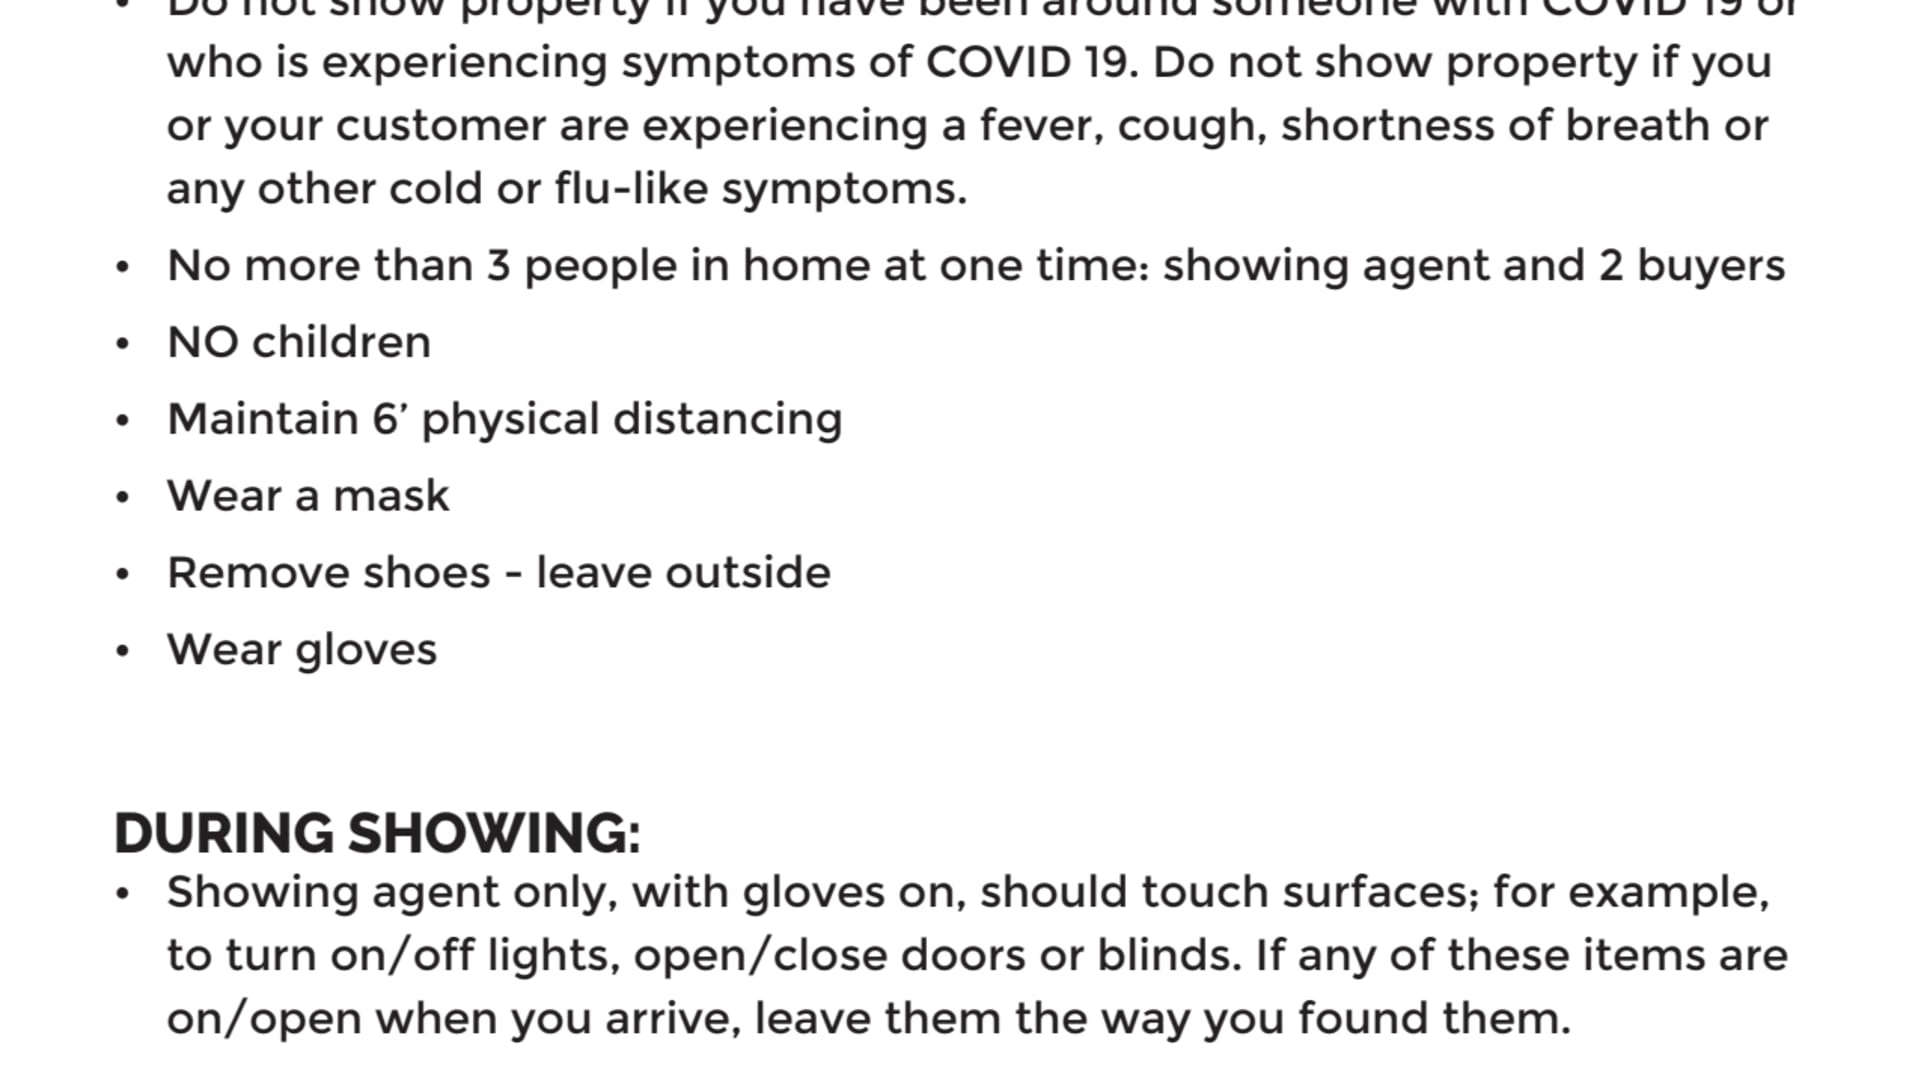 COVID-19 CBMM Showing Instructions